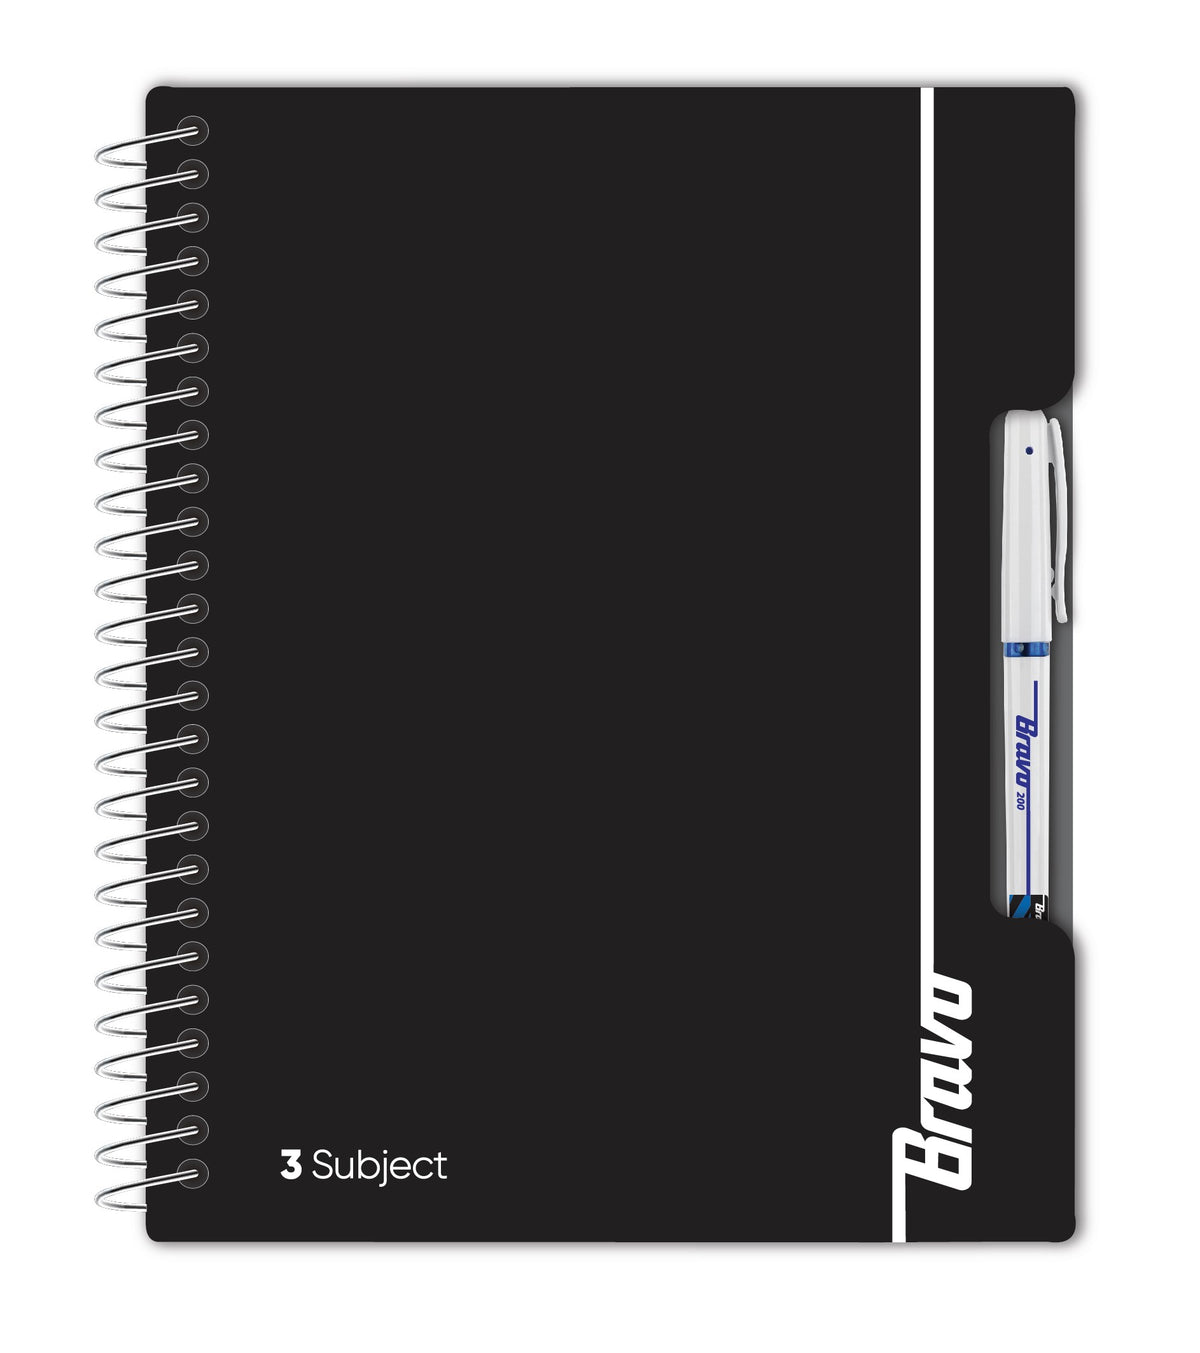 New Bravo NoteBook 3 Subject  - Black